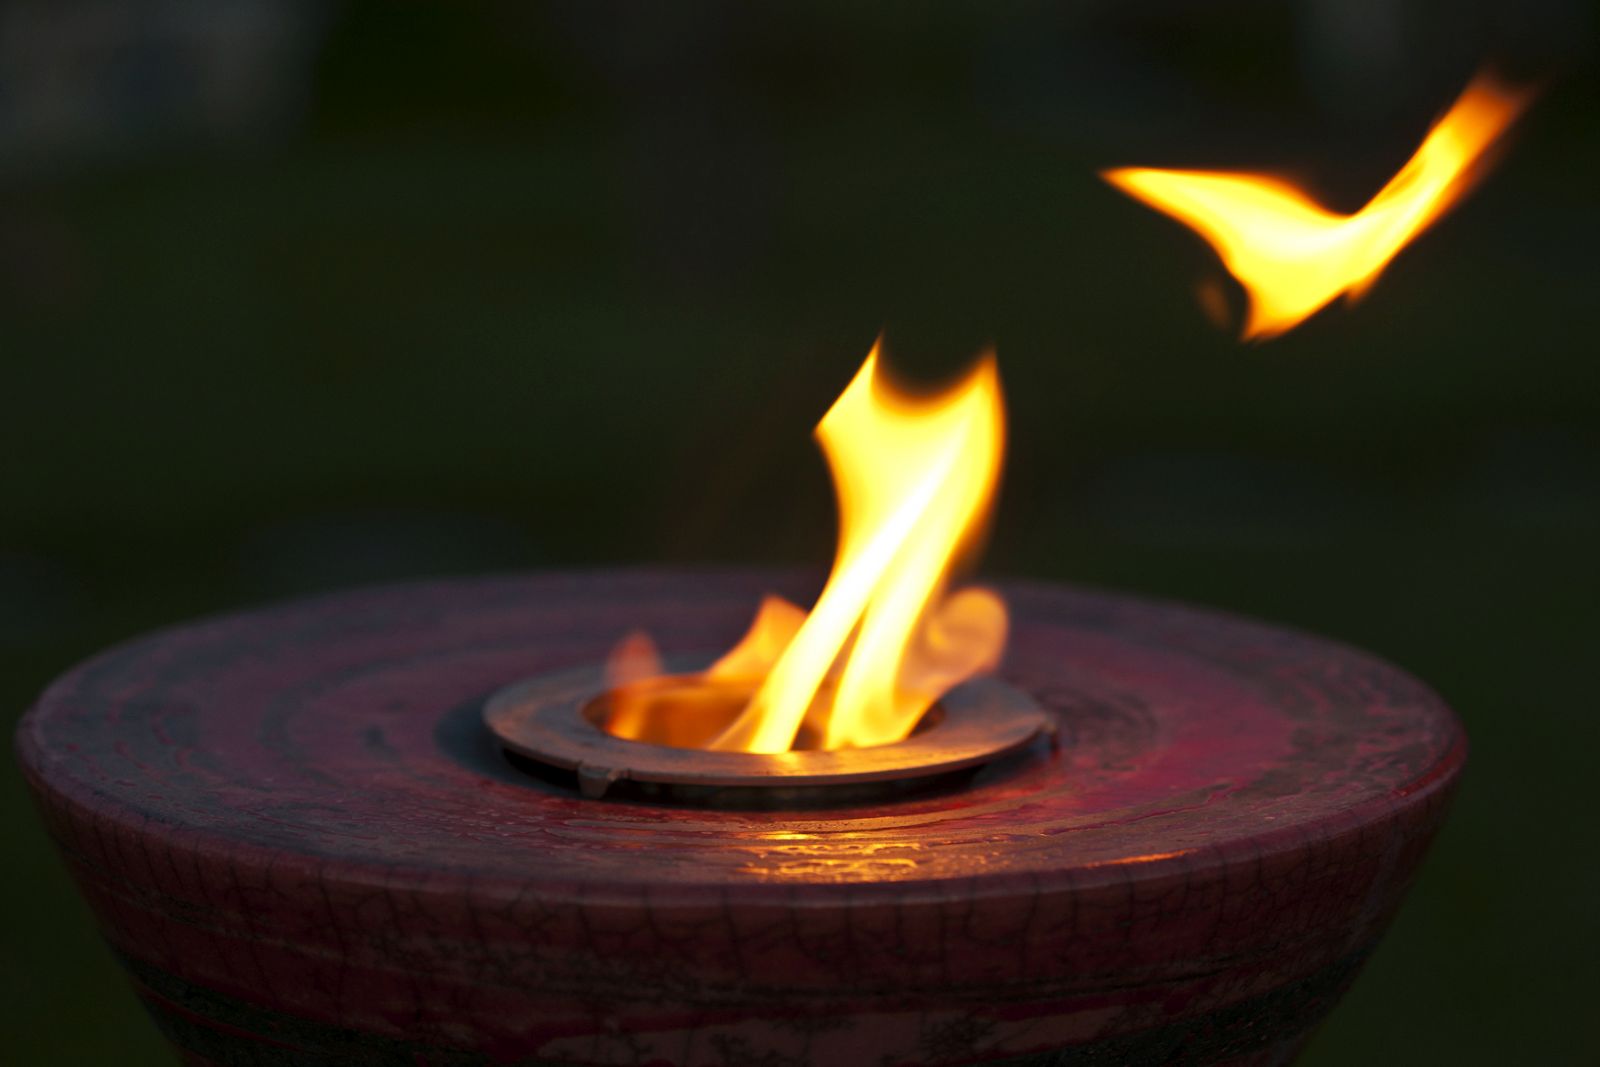 Feuerschale mit Sockel Keramik | Gartenfackel  | Flammschale mit Sockel türkis/Grün 120cm